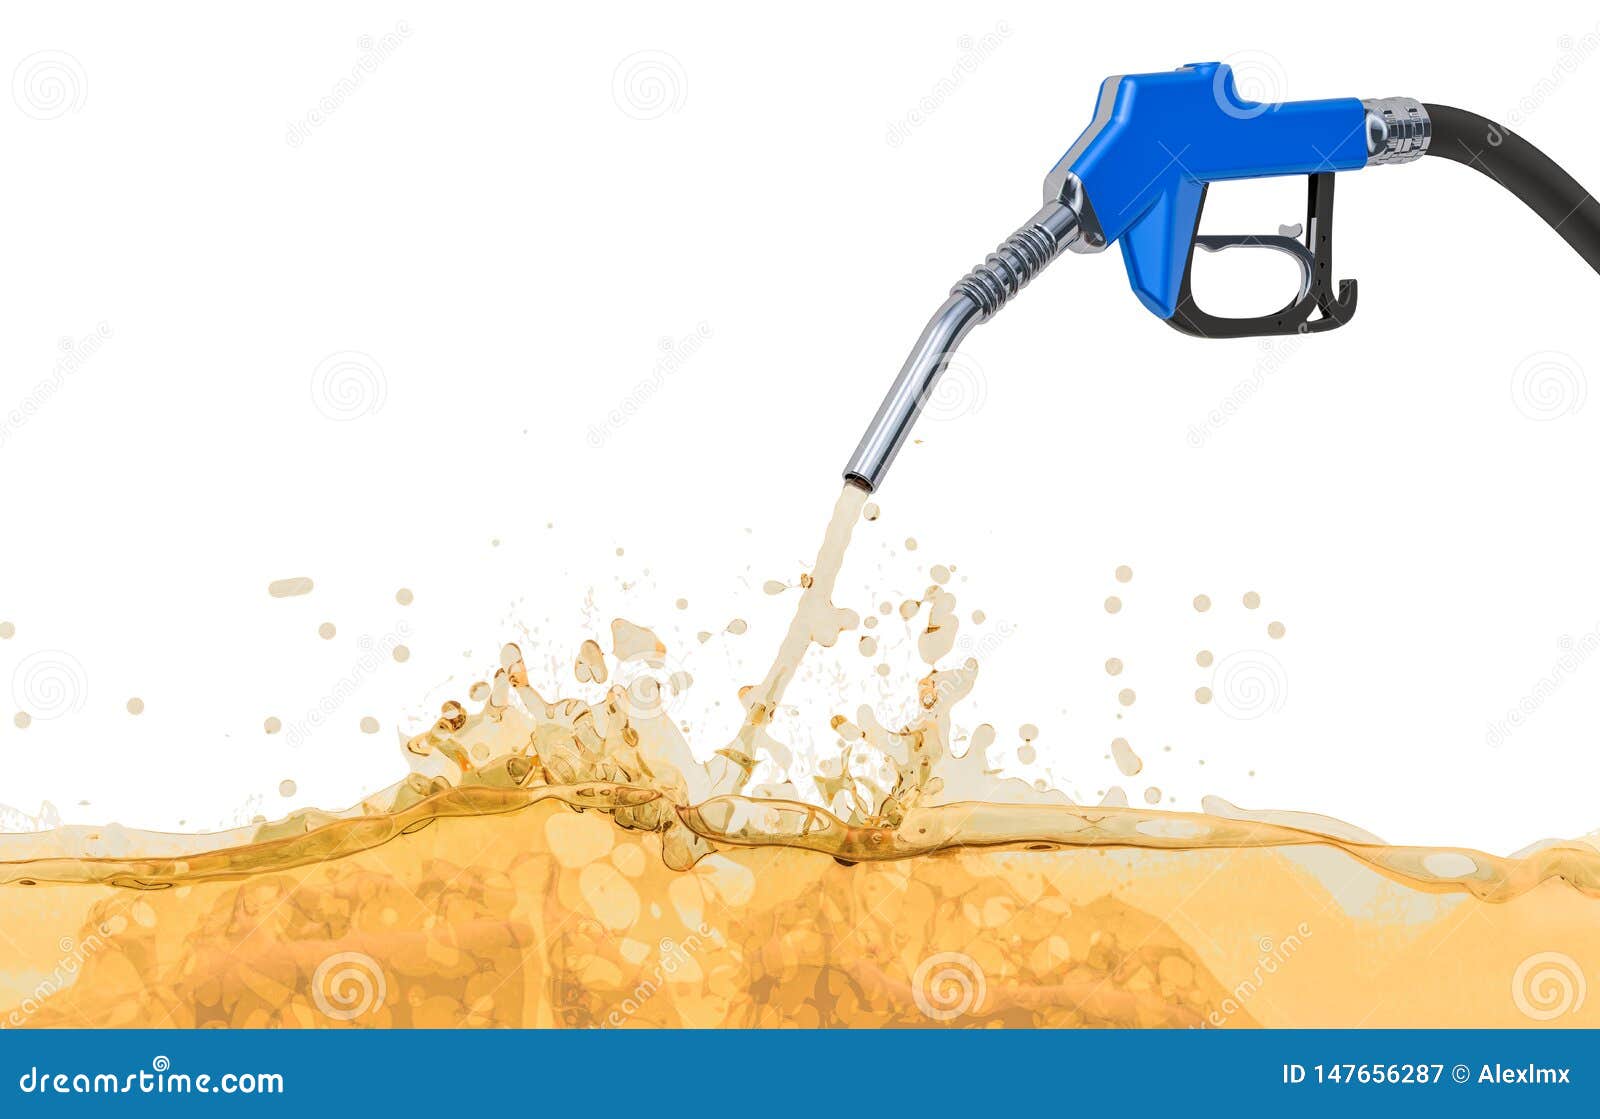 fuel pump nozzle with petrol, 3d rendering